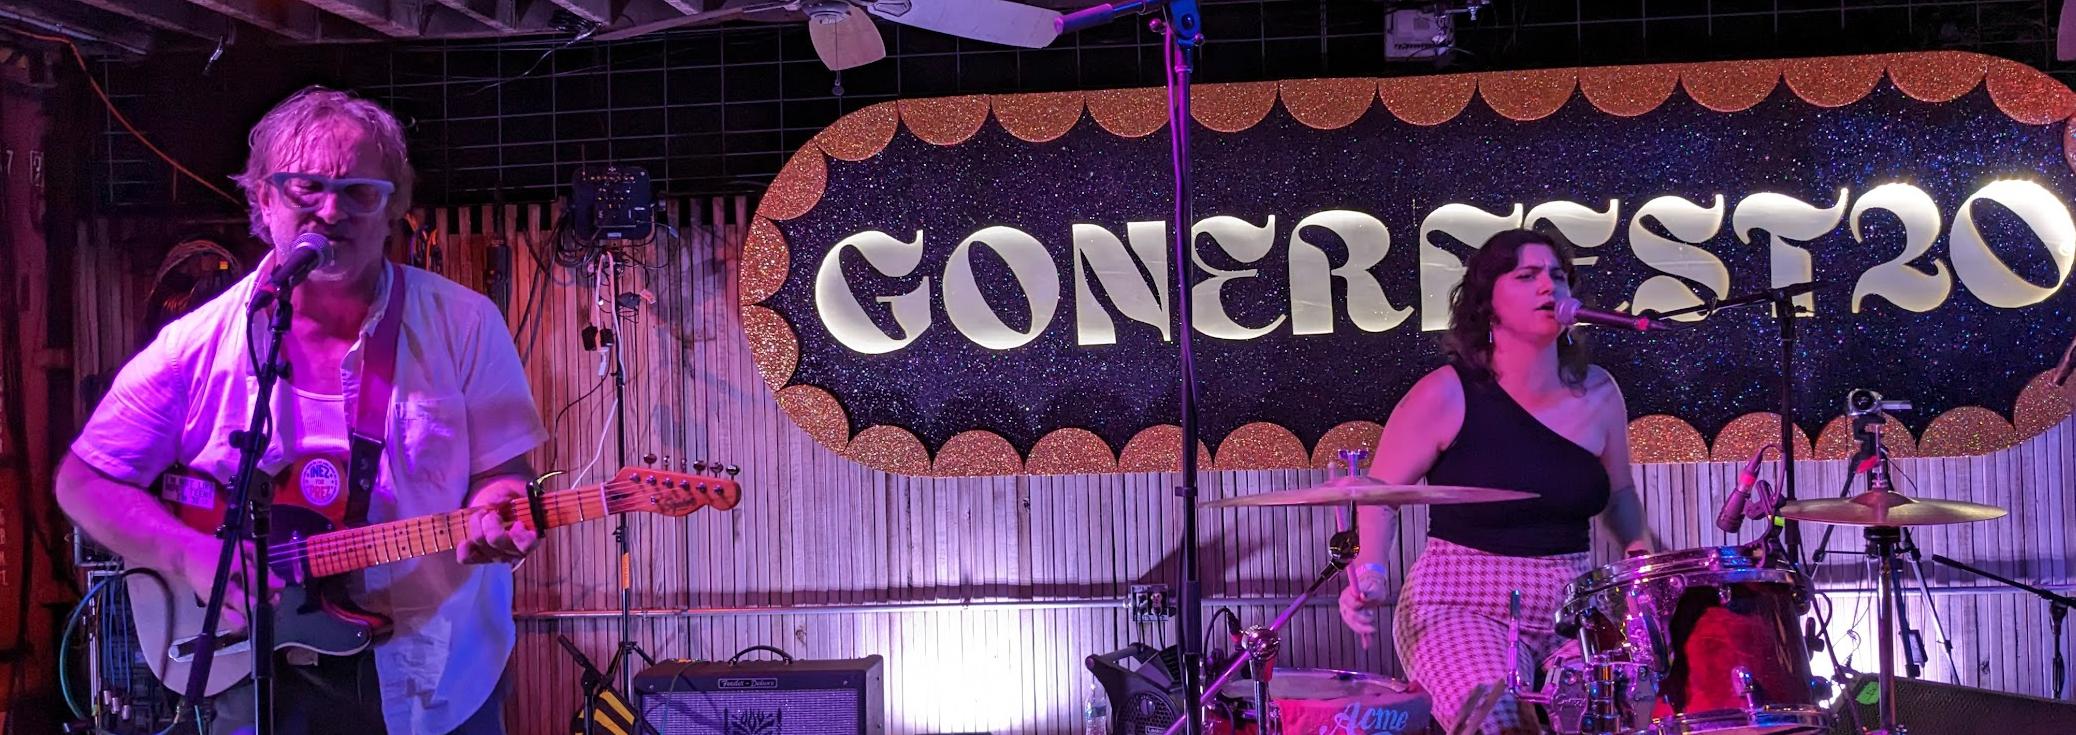 Gonerfest 20, Memphis, TN